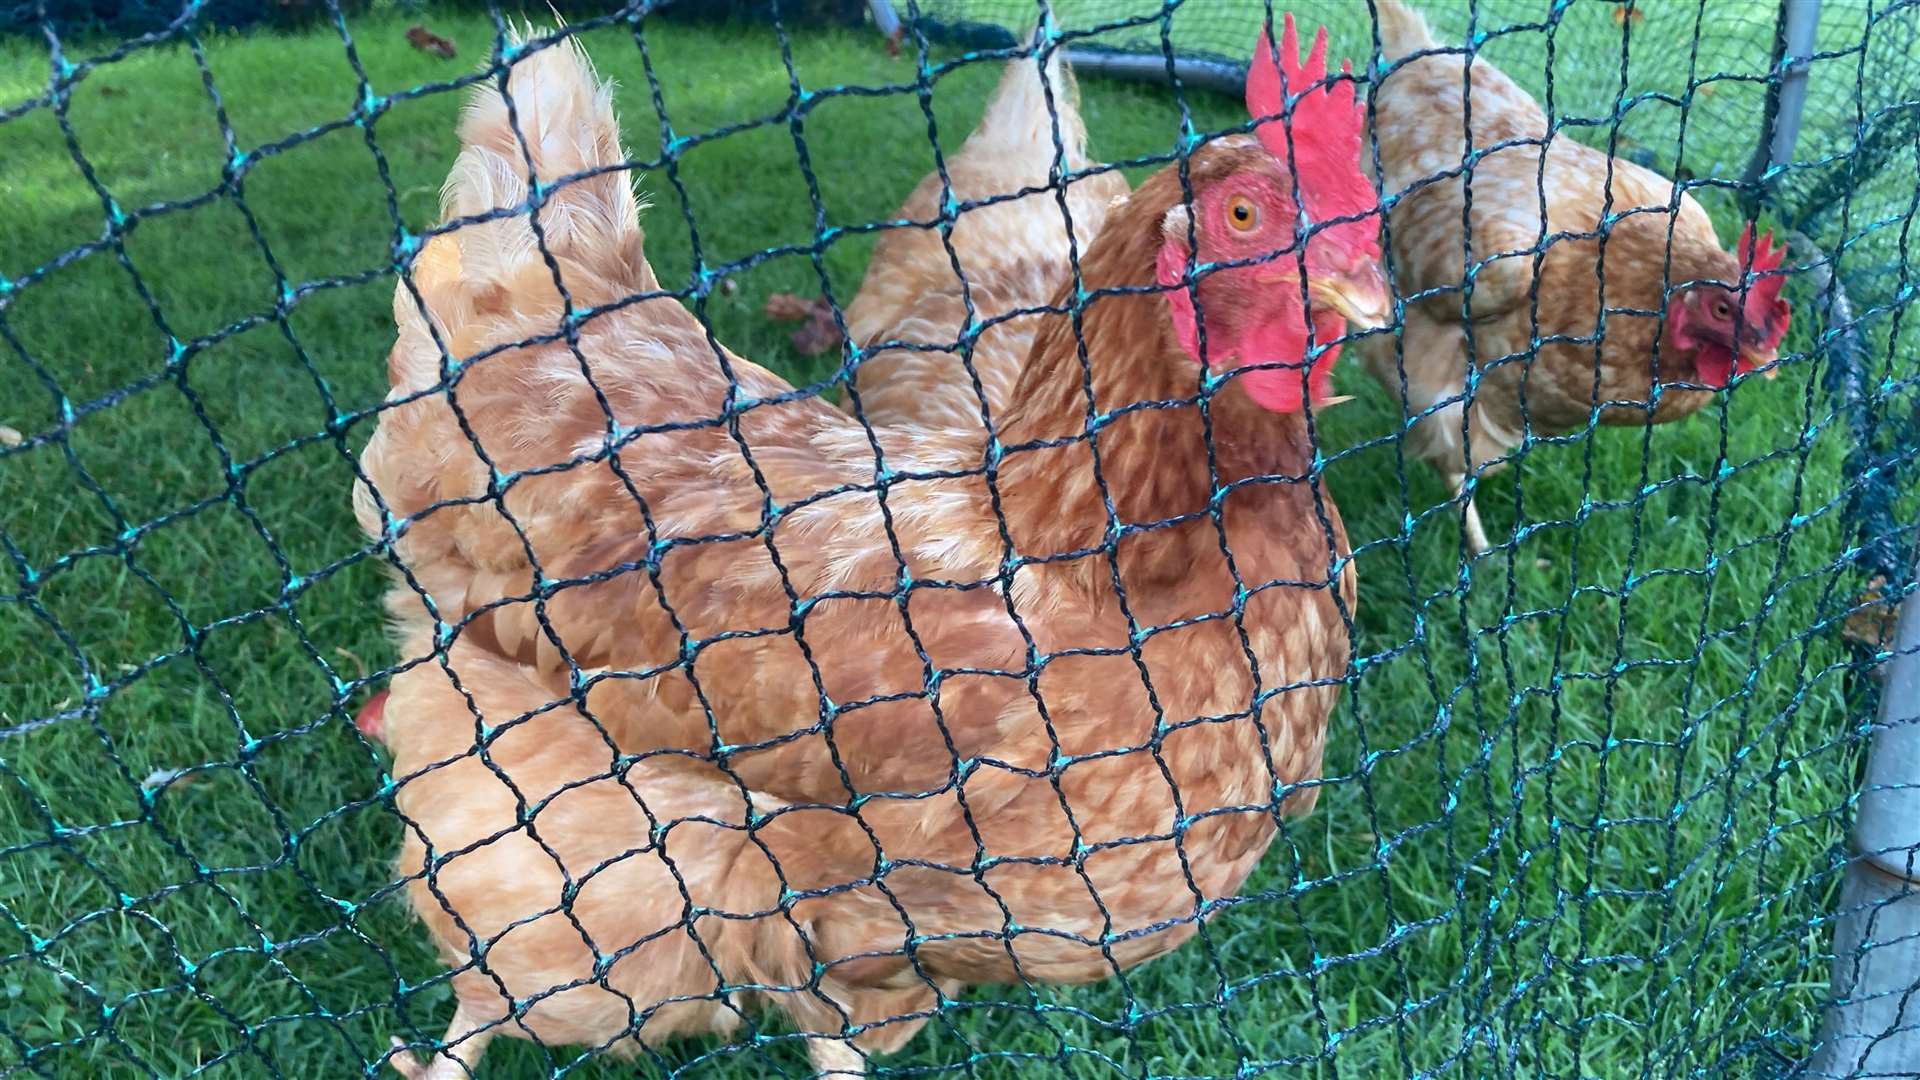 Chickens not enjoying Defra's 'flockdown' to counter bird flu. Picture: John Nurden